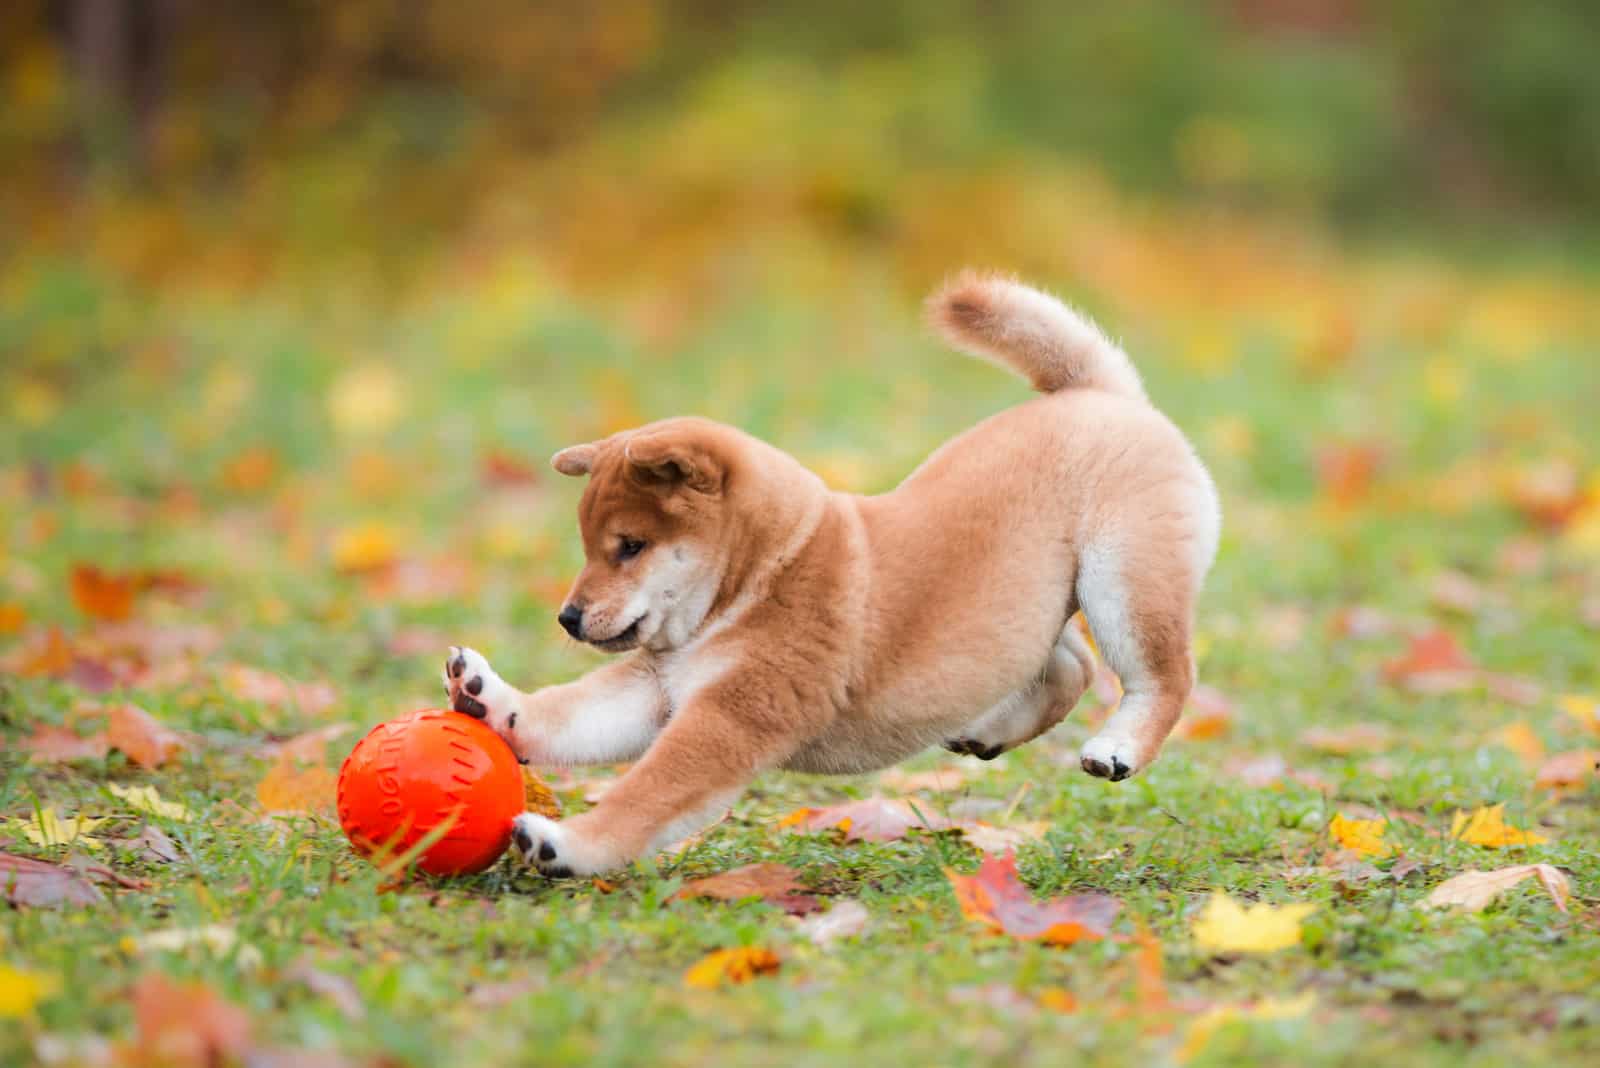 shiba inu puppy playing with ball